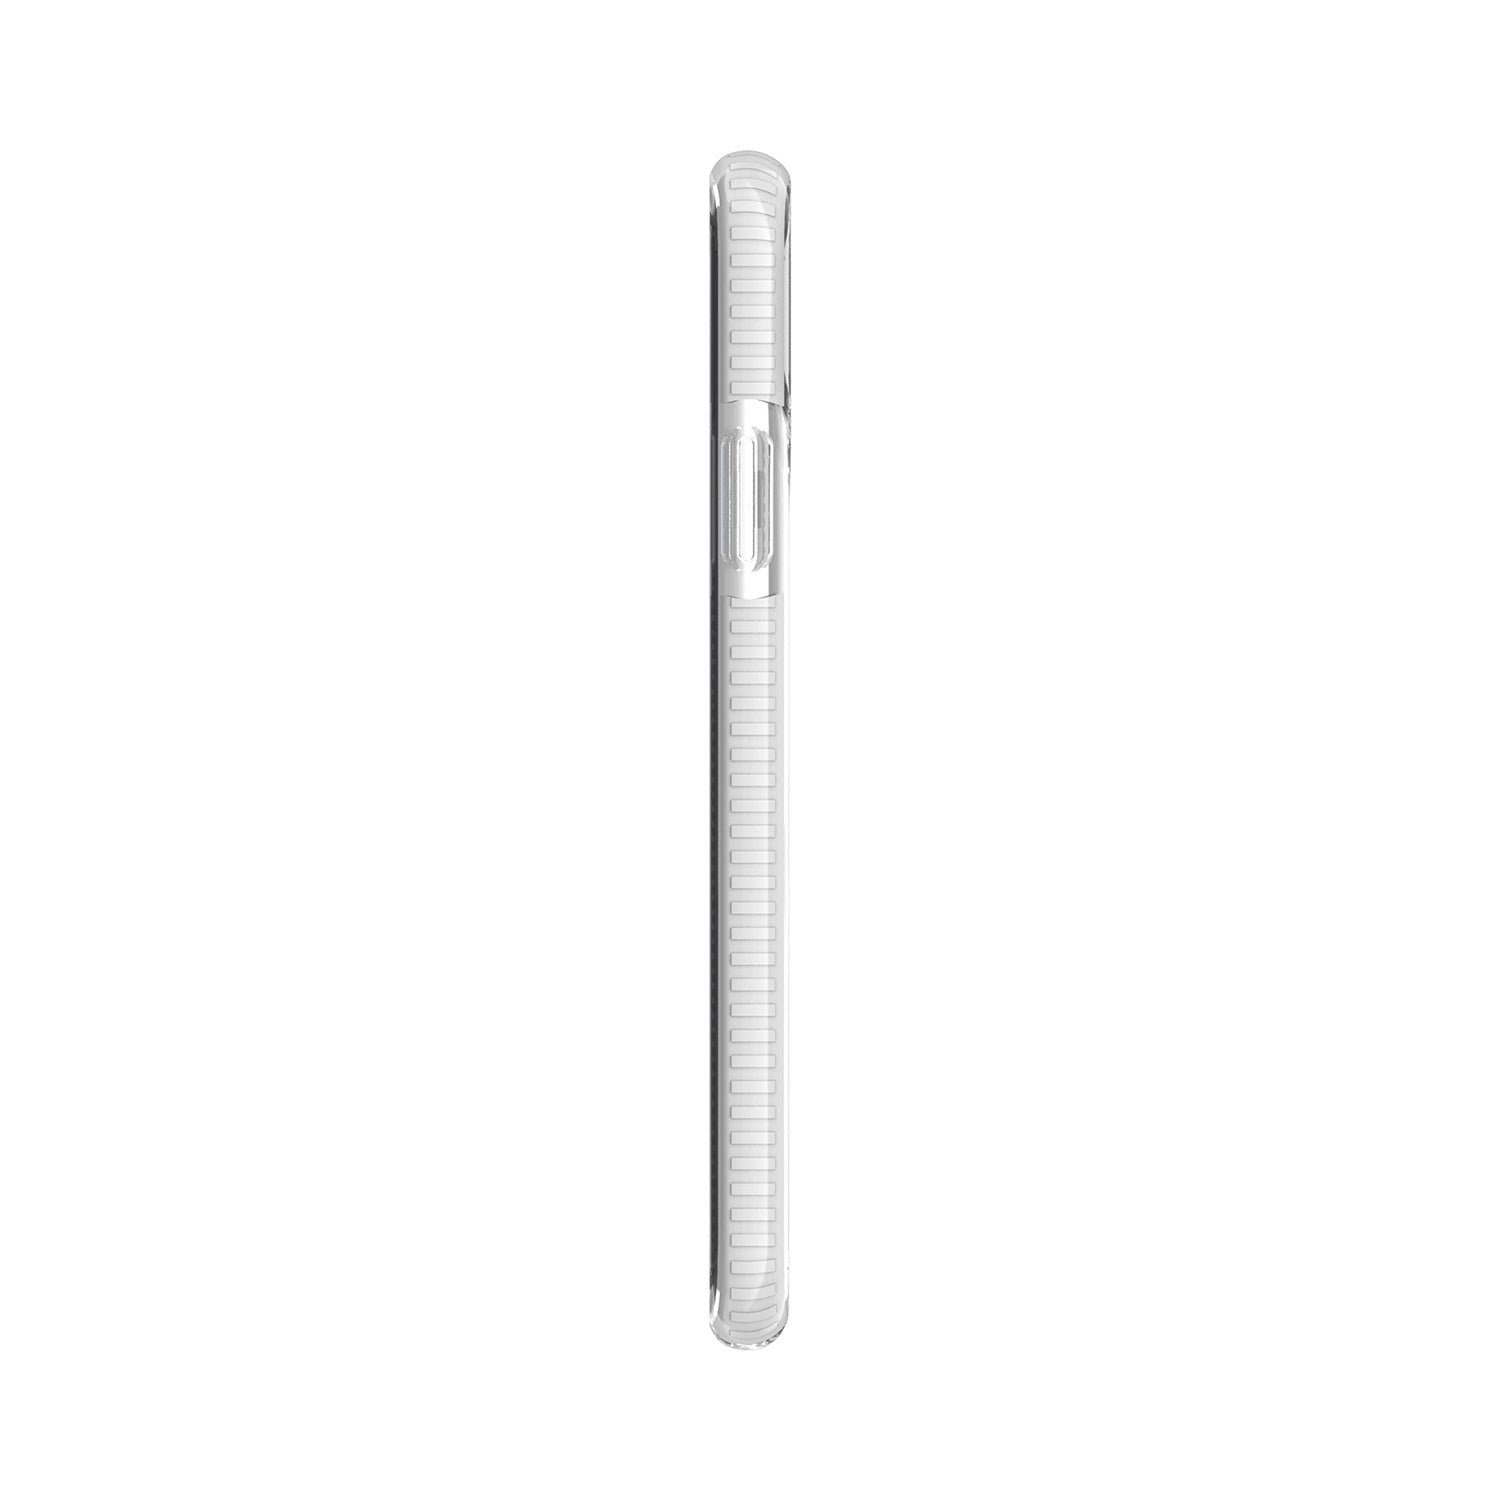 iPhone 13 Pro Max Transparent TPU Shockproof Drop Resistant Case